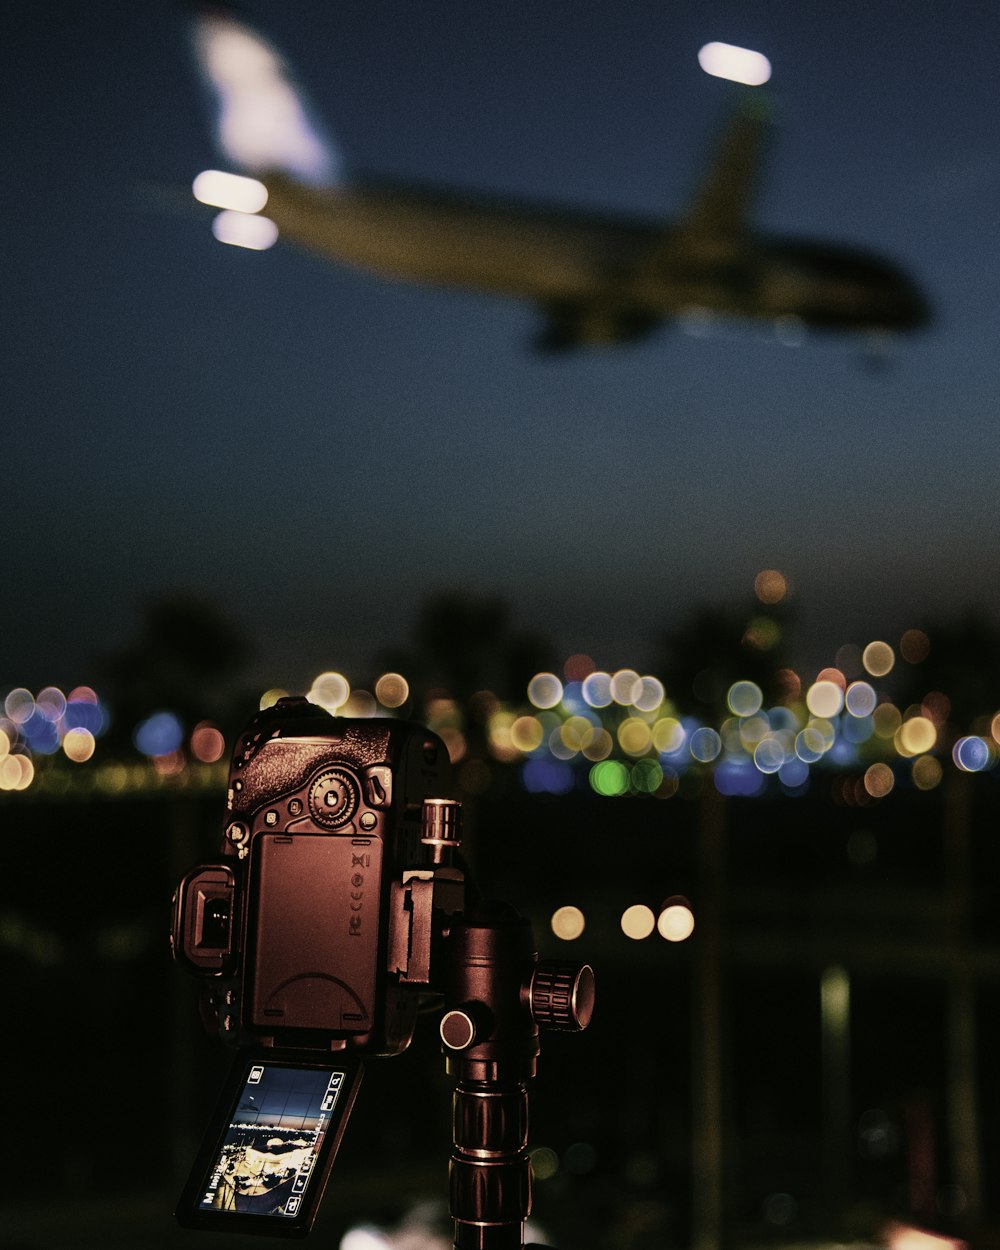 Cámara de video negra capturando un avión en vuelo